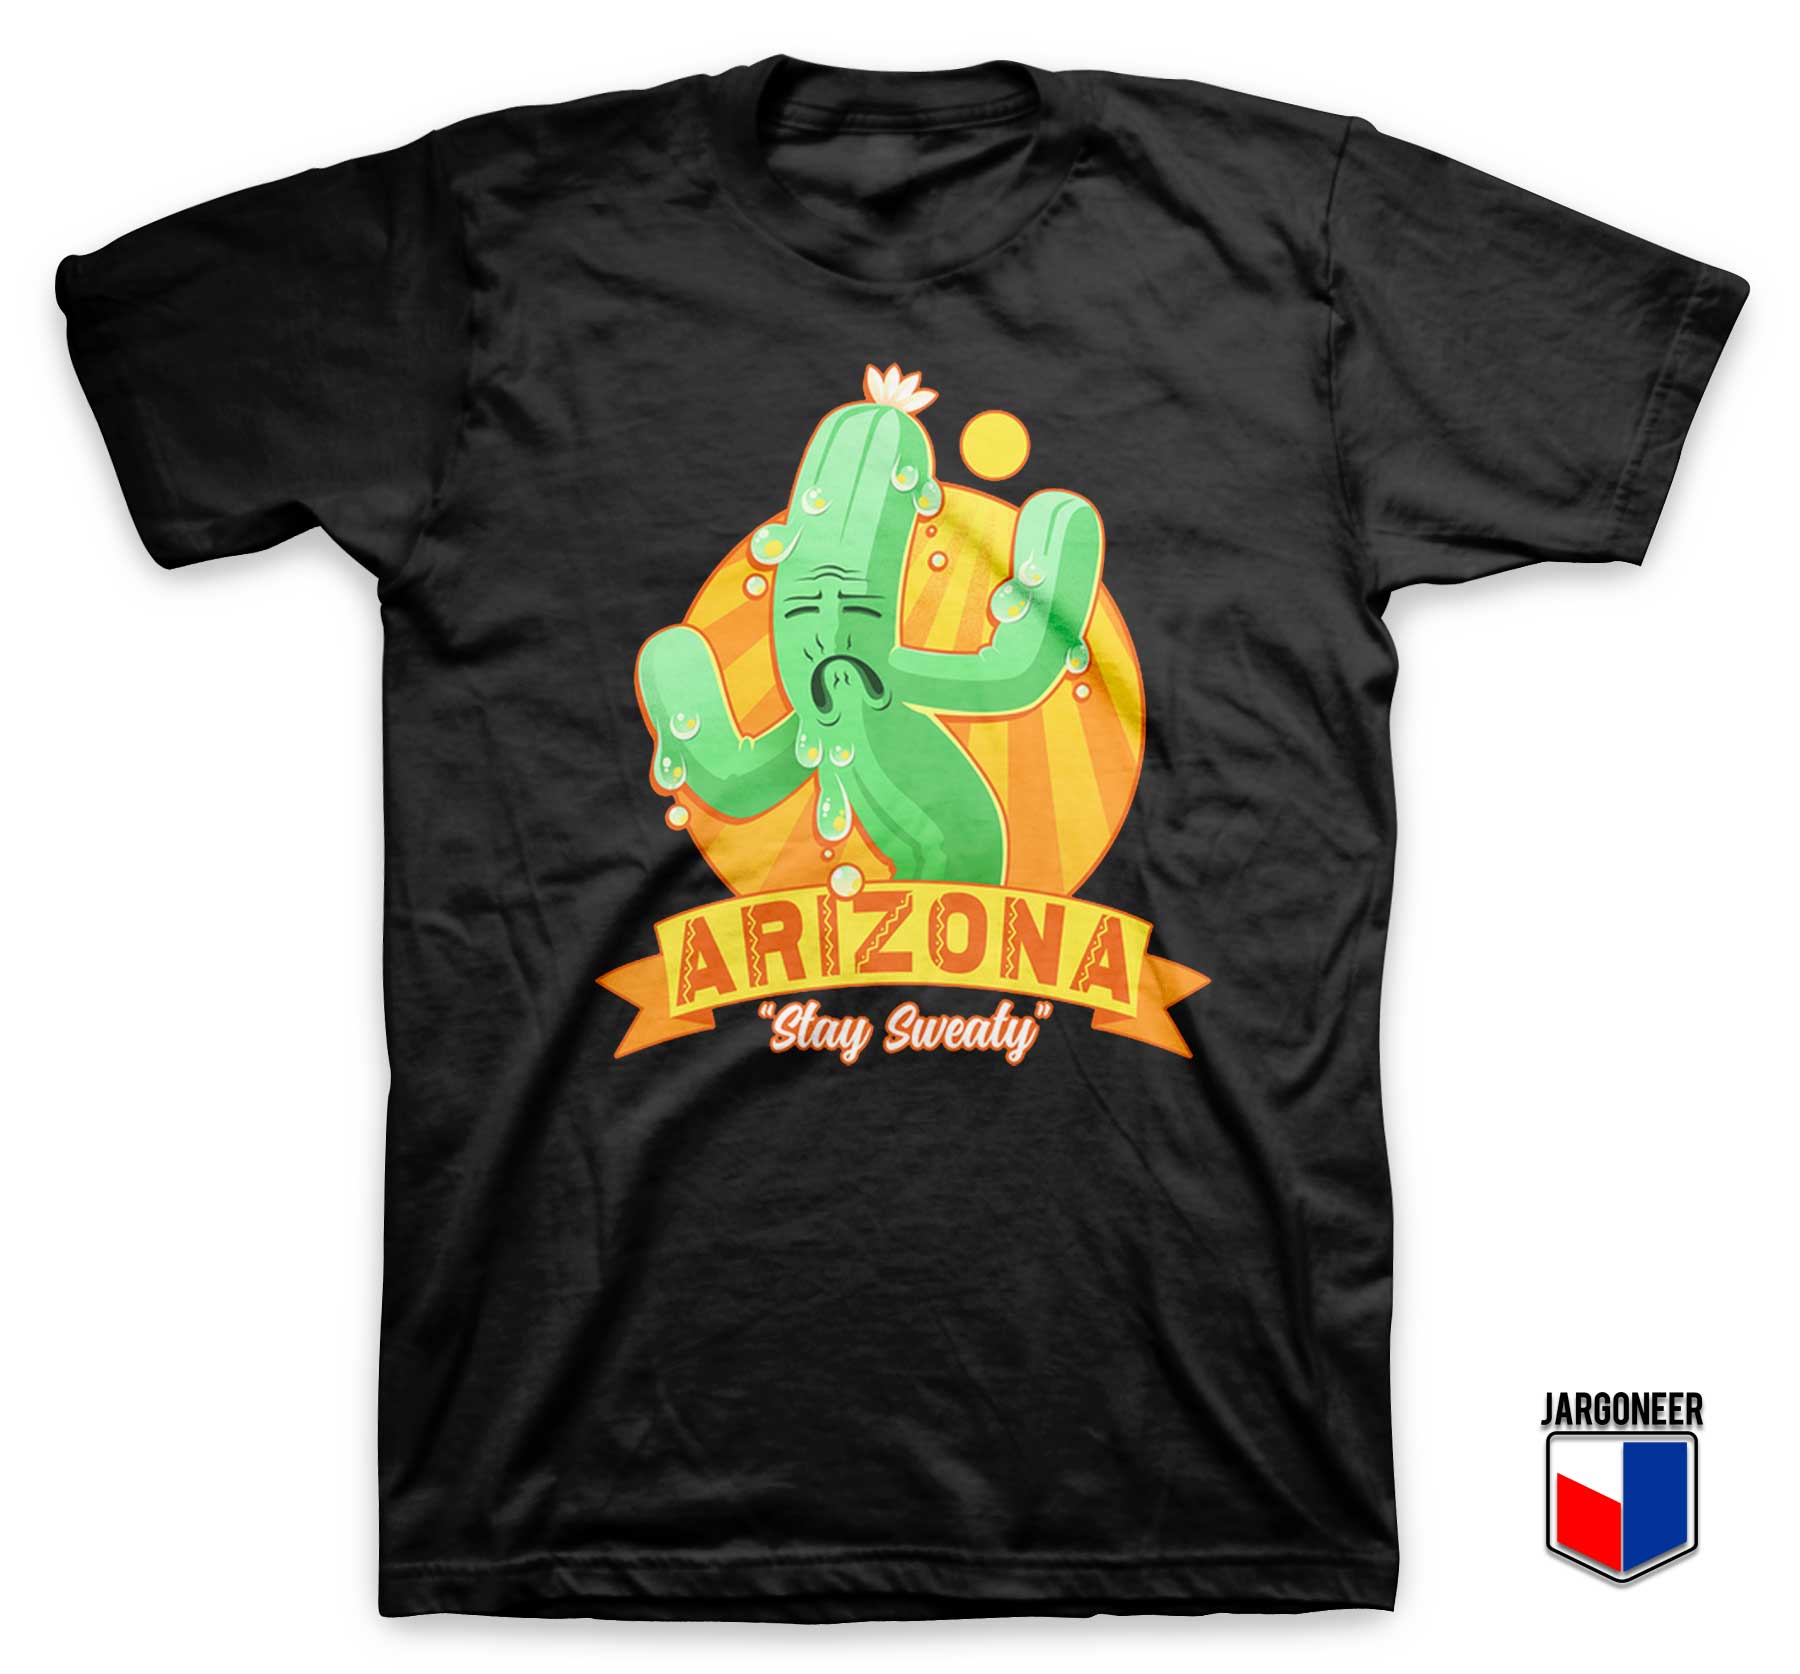 Arizona Stay Sweaty T Shirt - Shop Unique Graphic Cool Shirt Designs